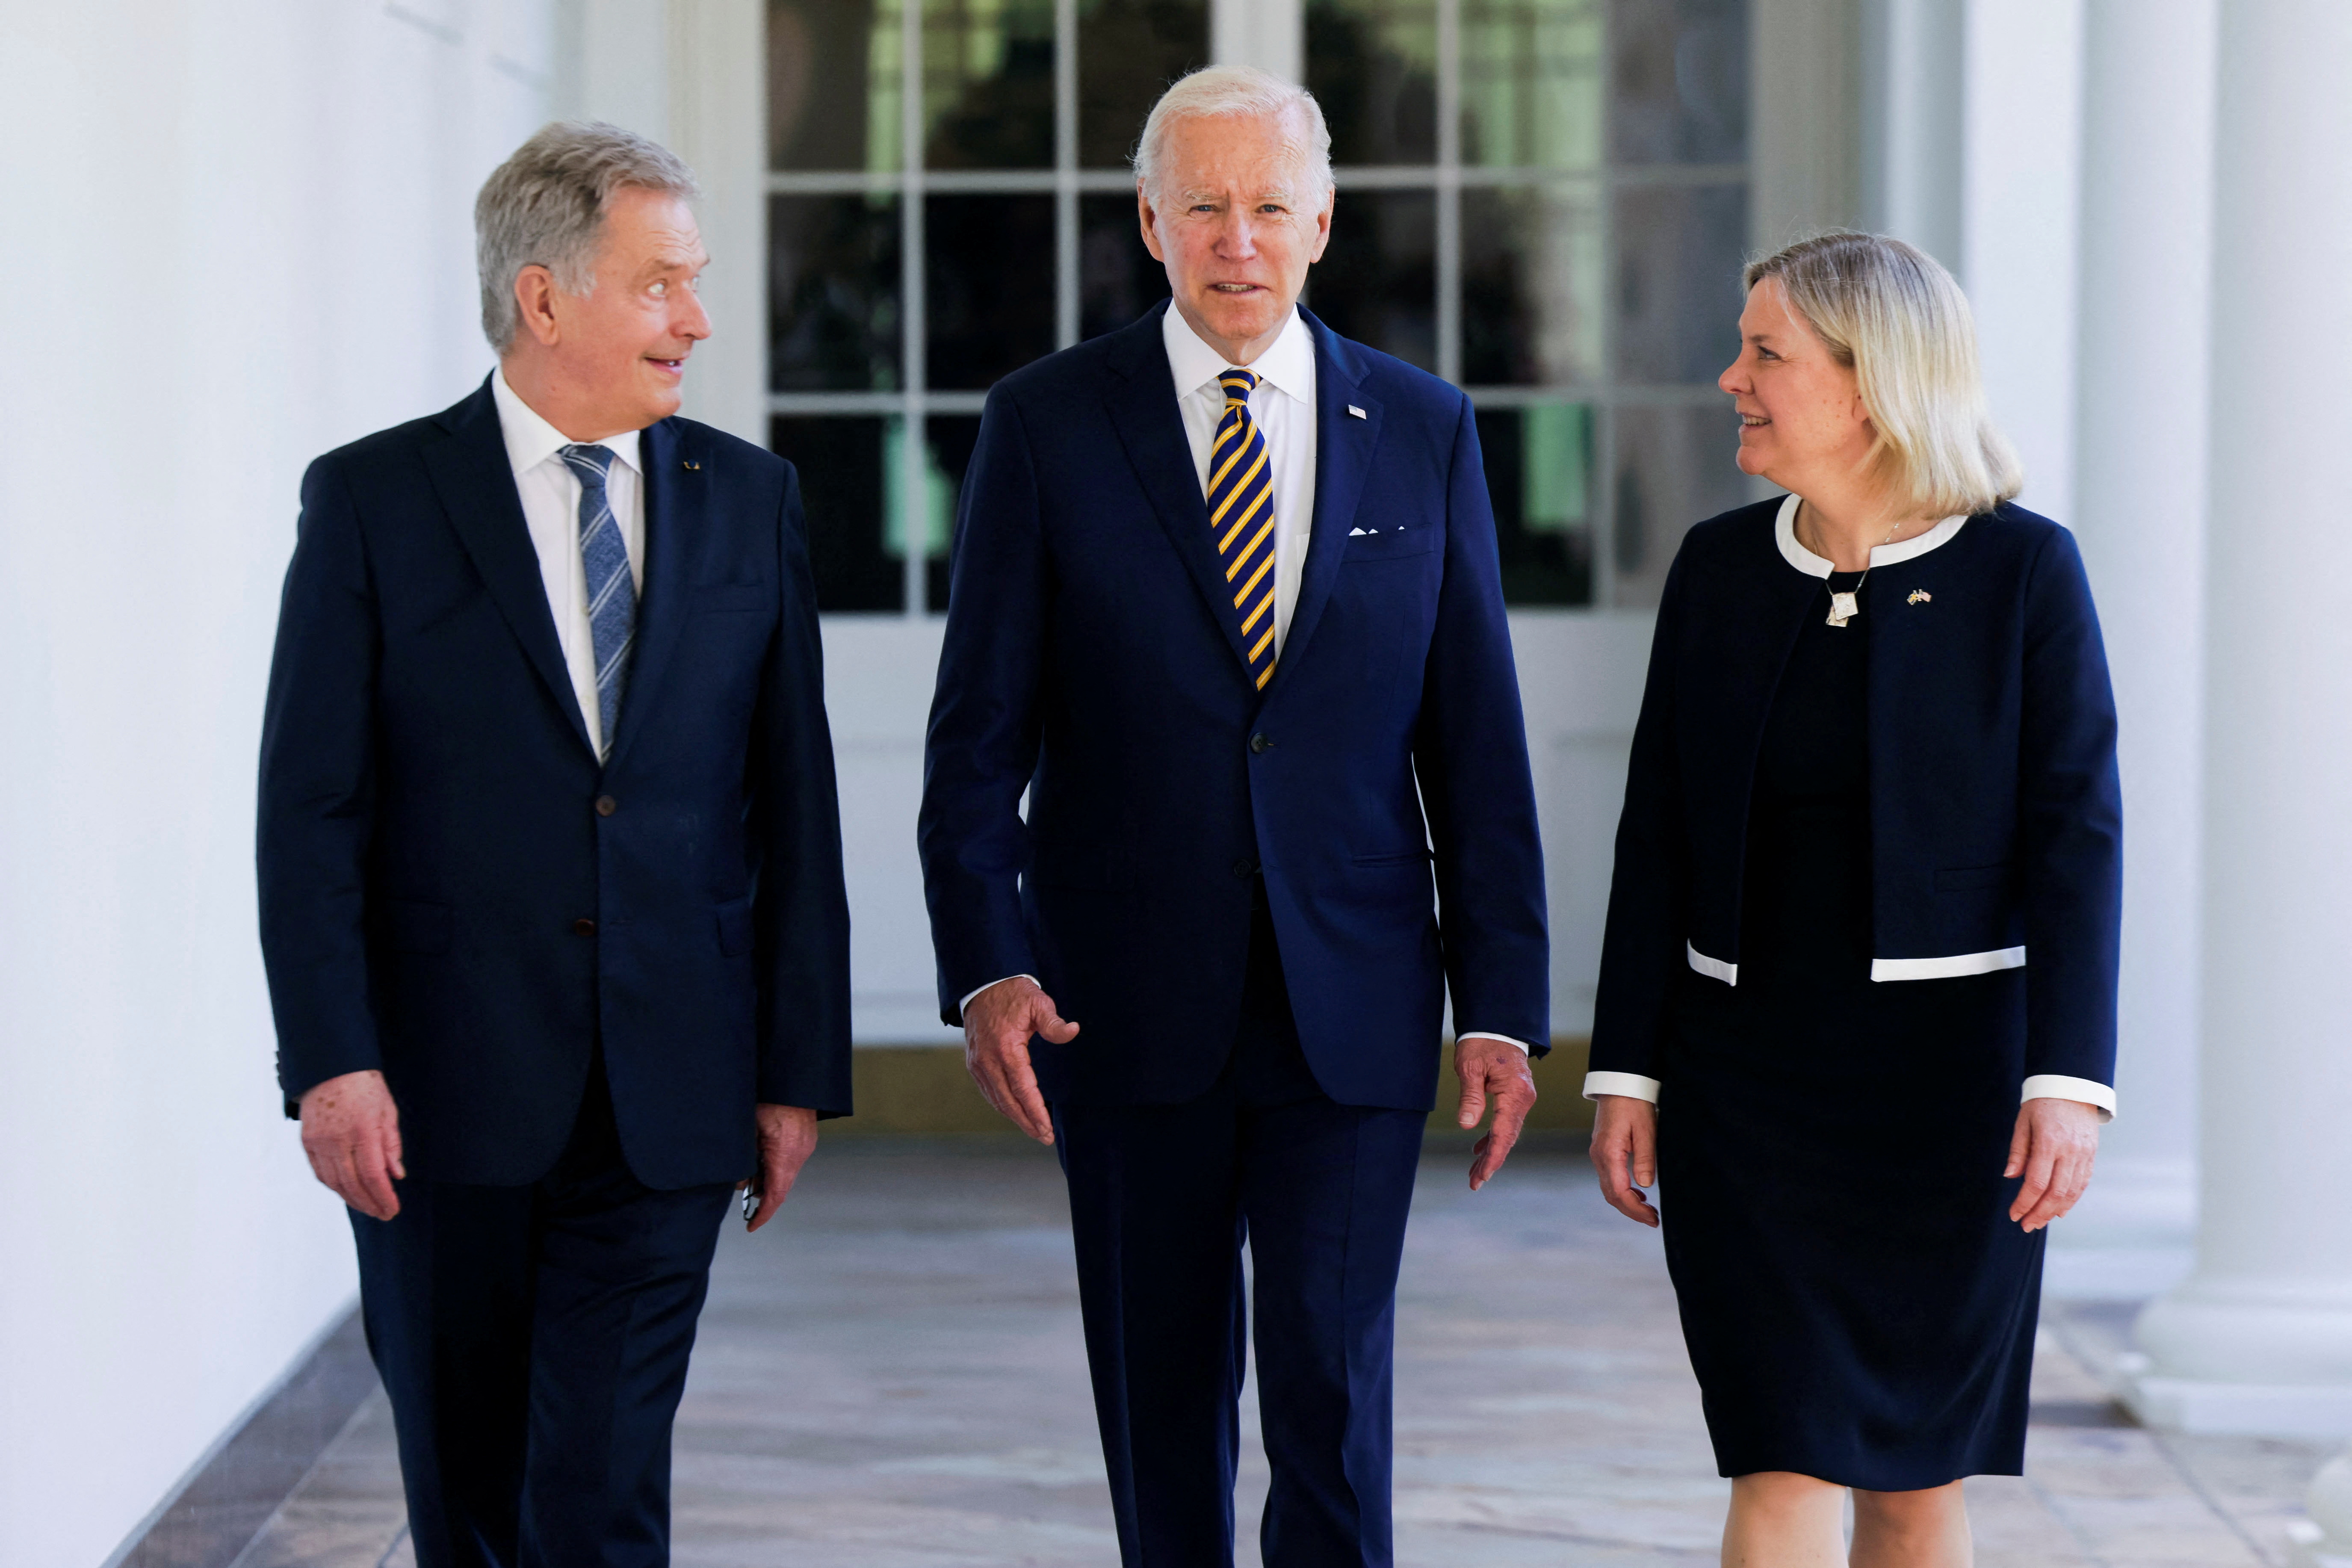 Biden meets leaders of Finland, Sweden on NATO expansion